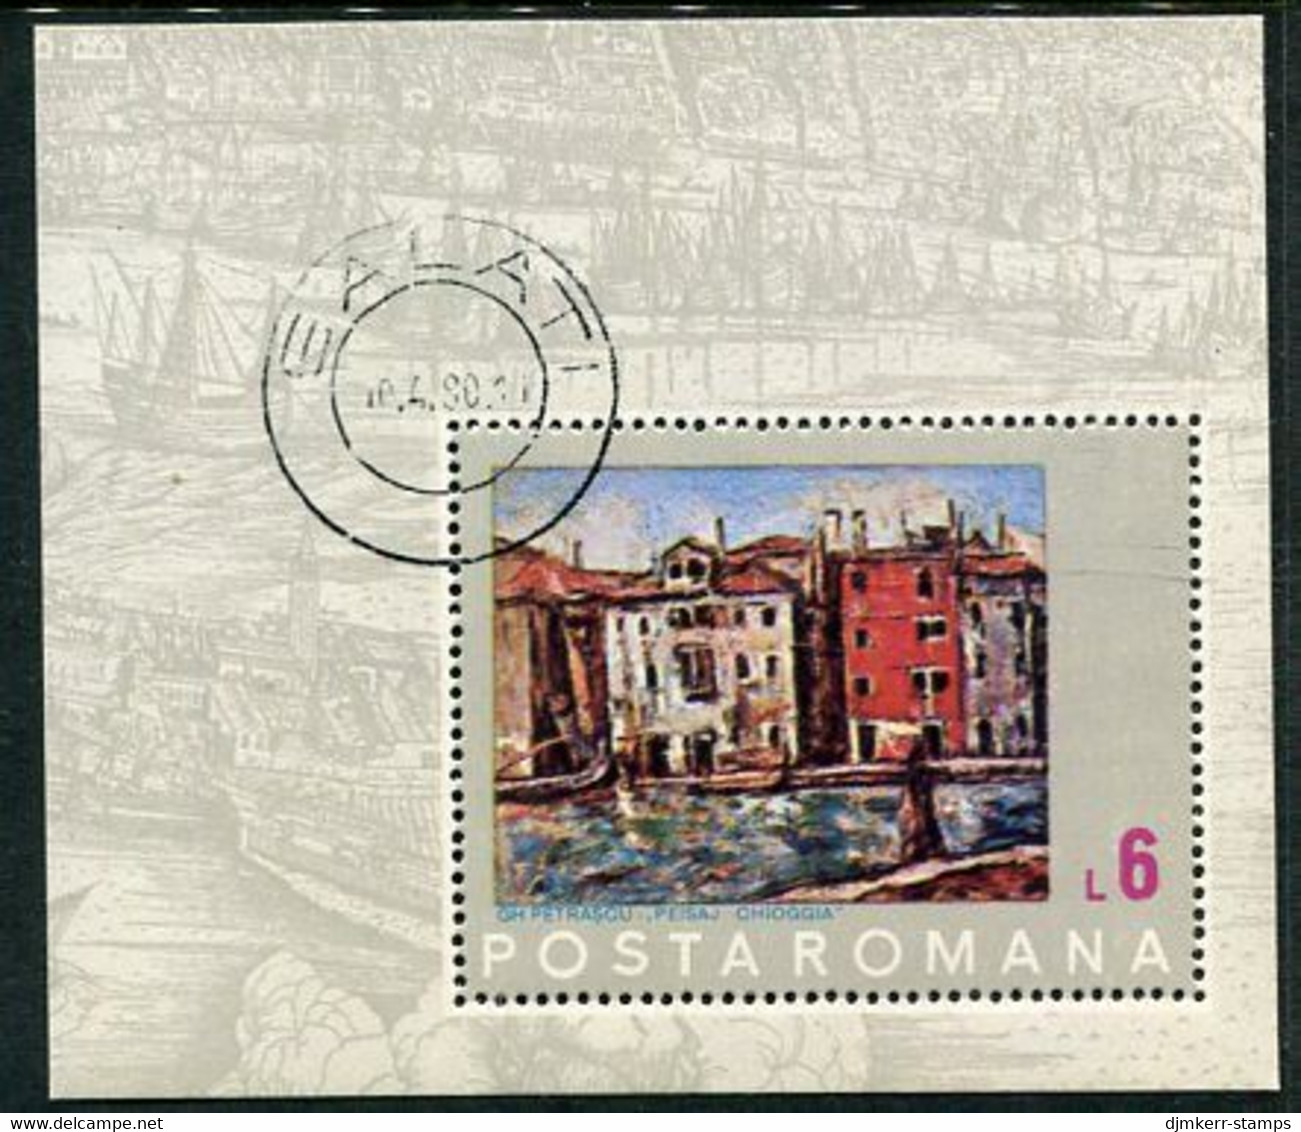 ROMANIA 1972 UNESCO Save Venice Block Used.  Michel Block 99 - Used Stamps